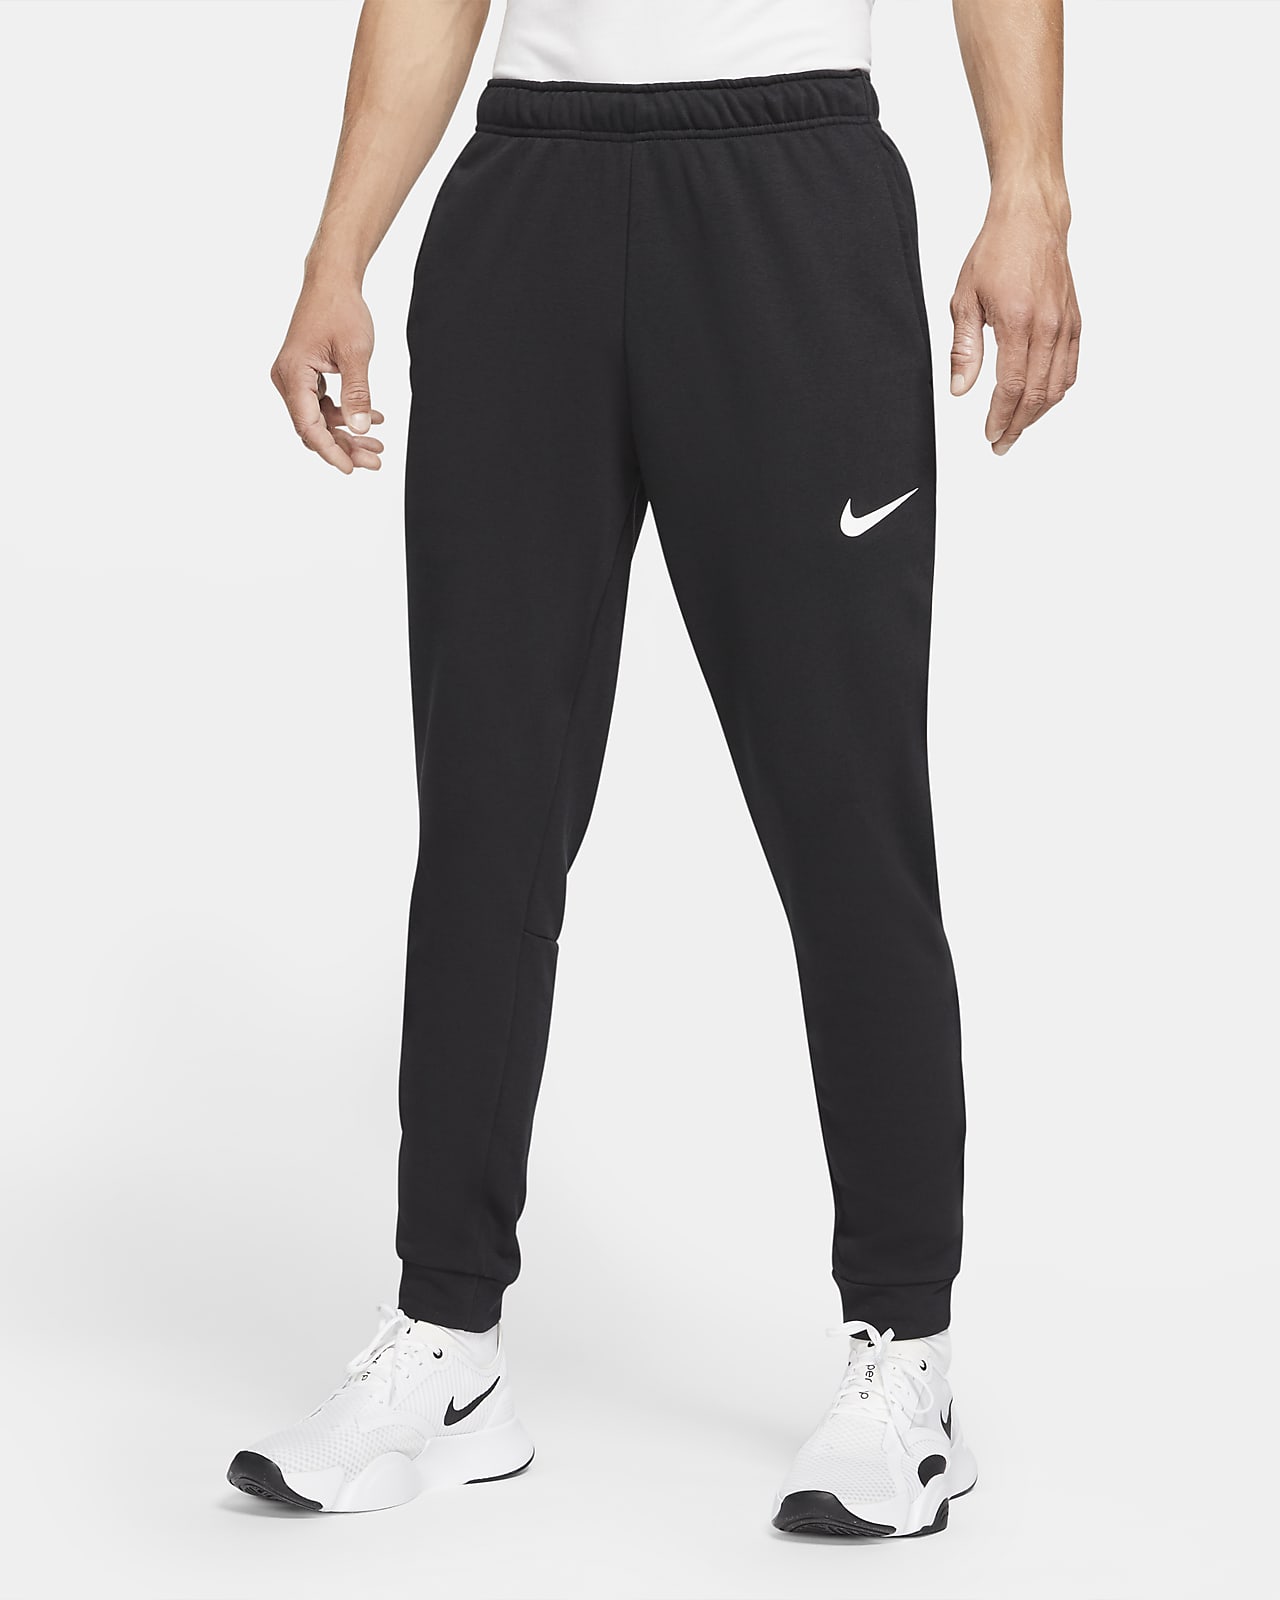 Pants de de tejido Fleece Dri-FIT entallados para Nike Dry. Nike MX